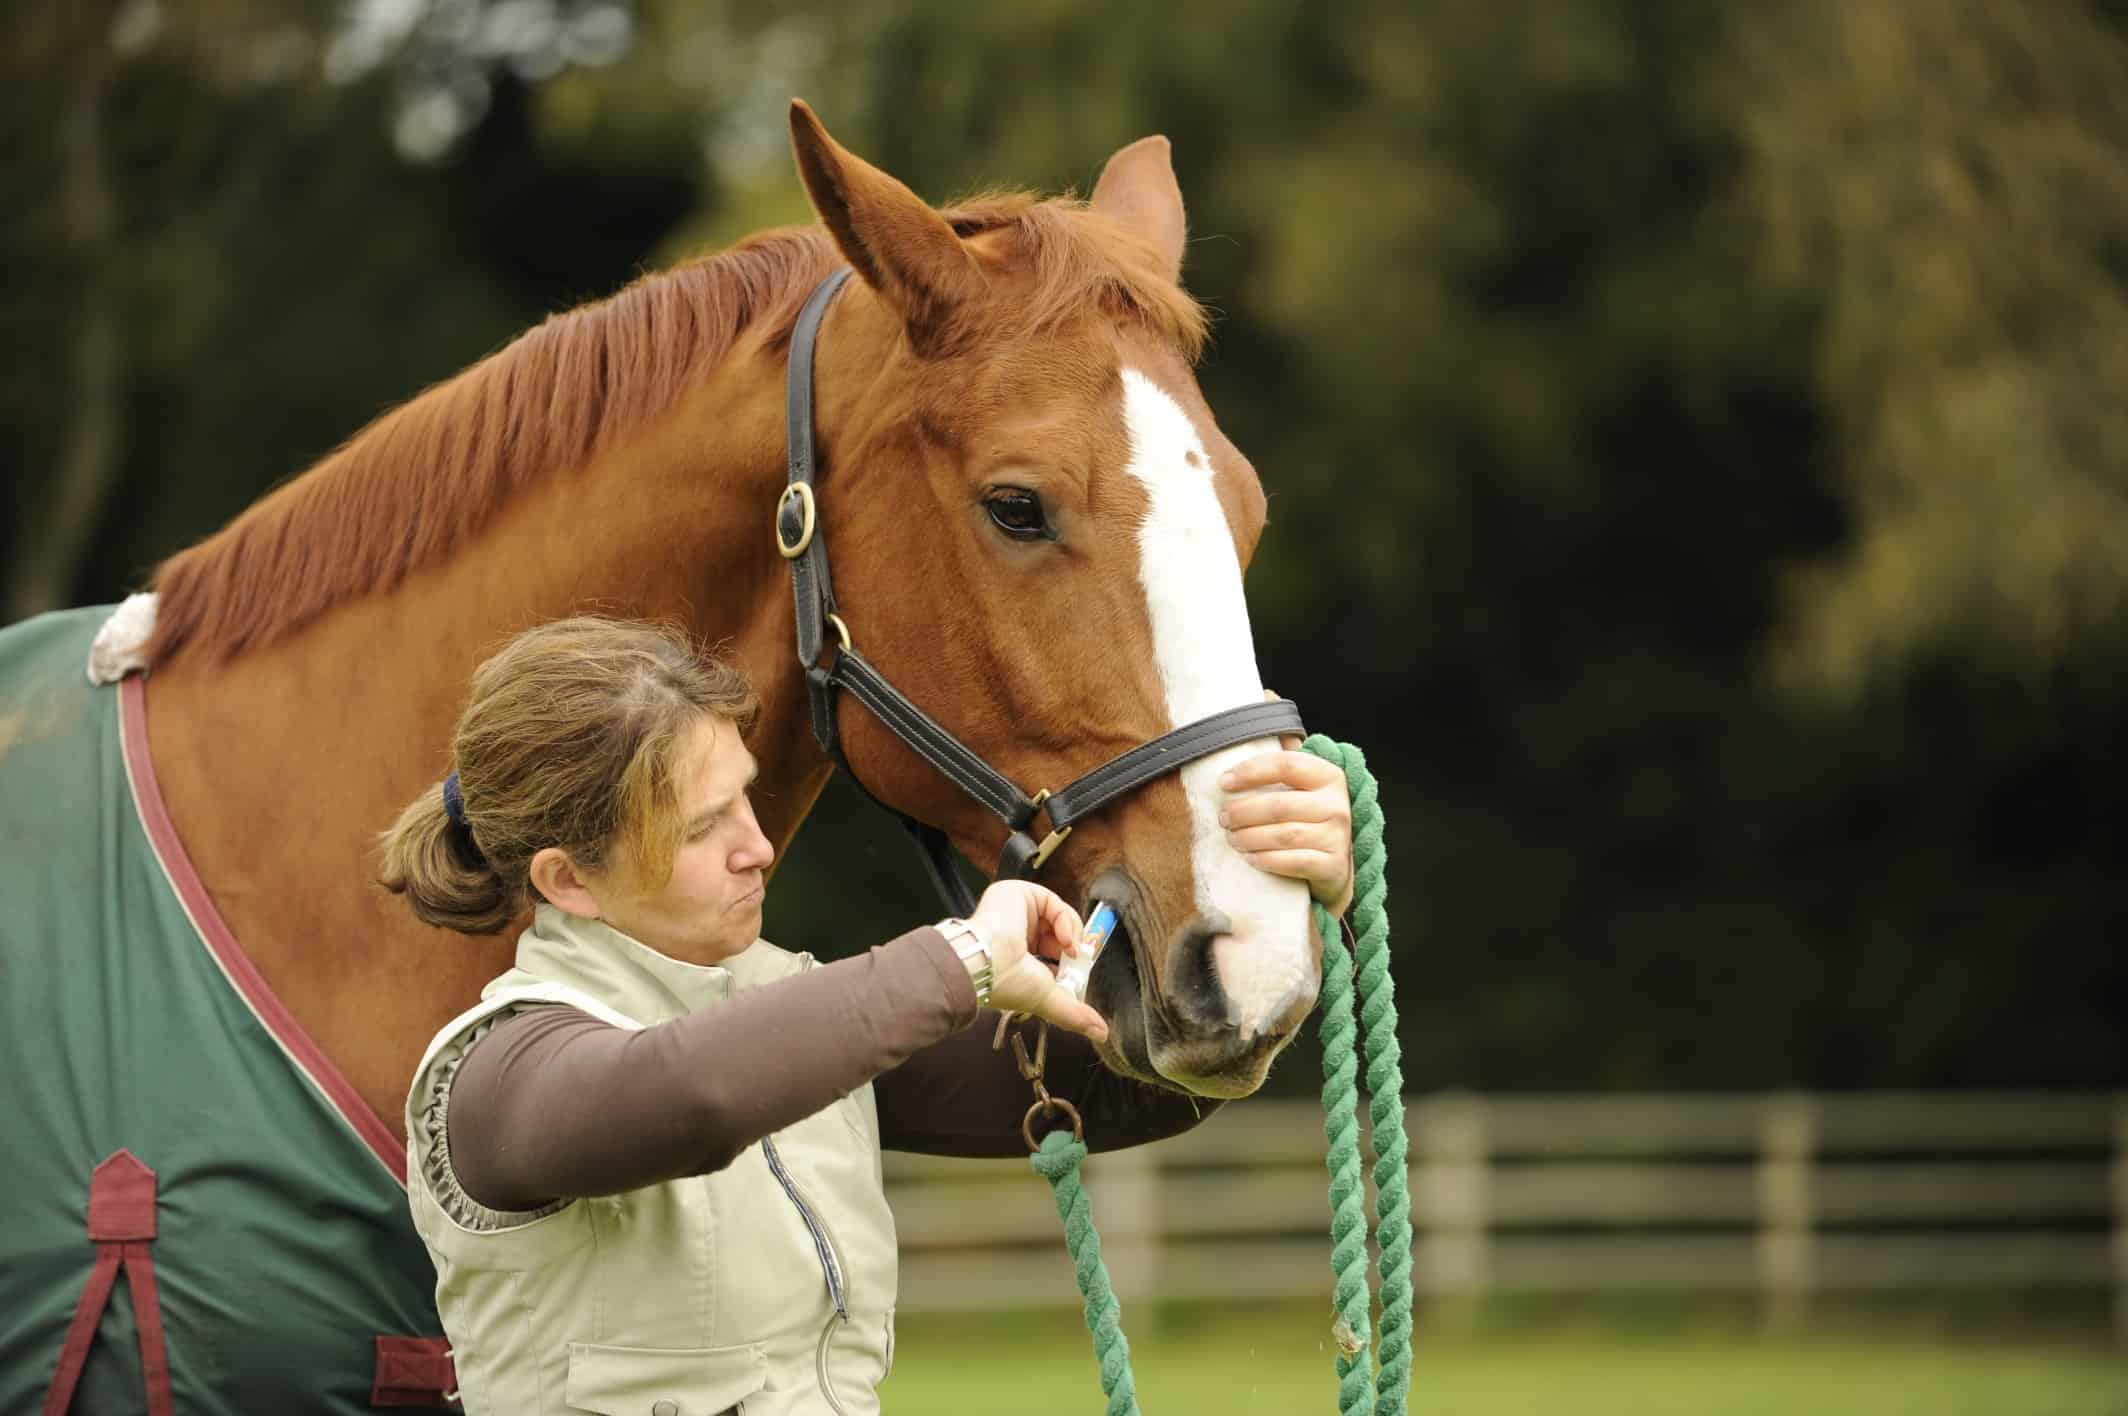 Worm control, season by season | Horse and Rider